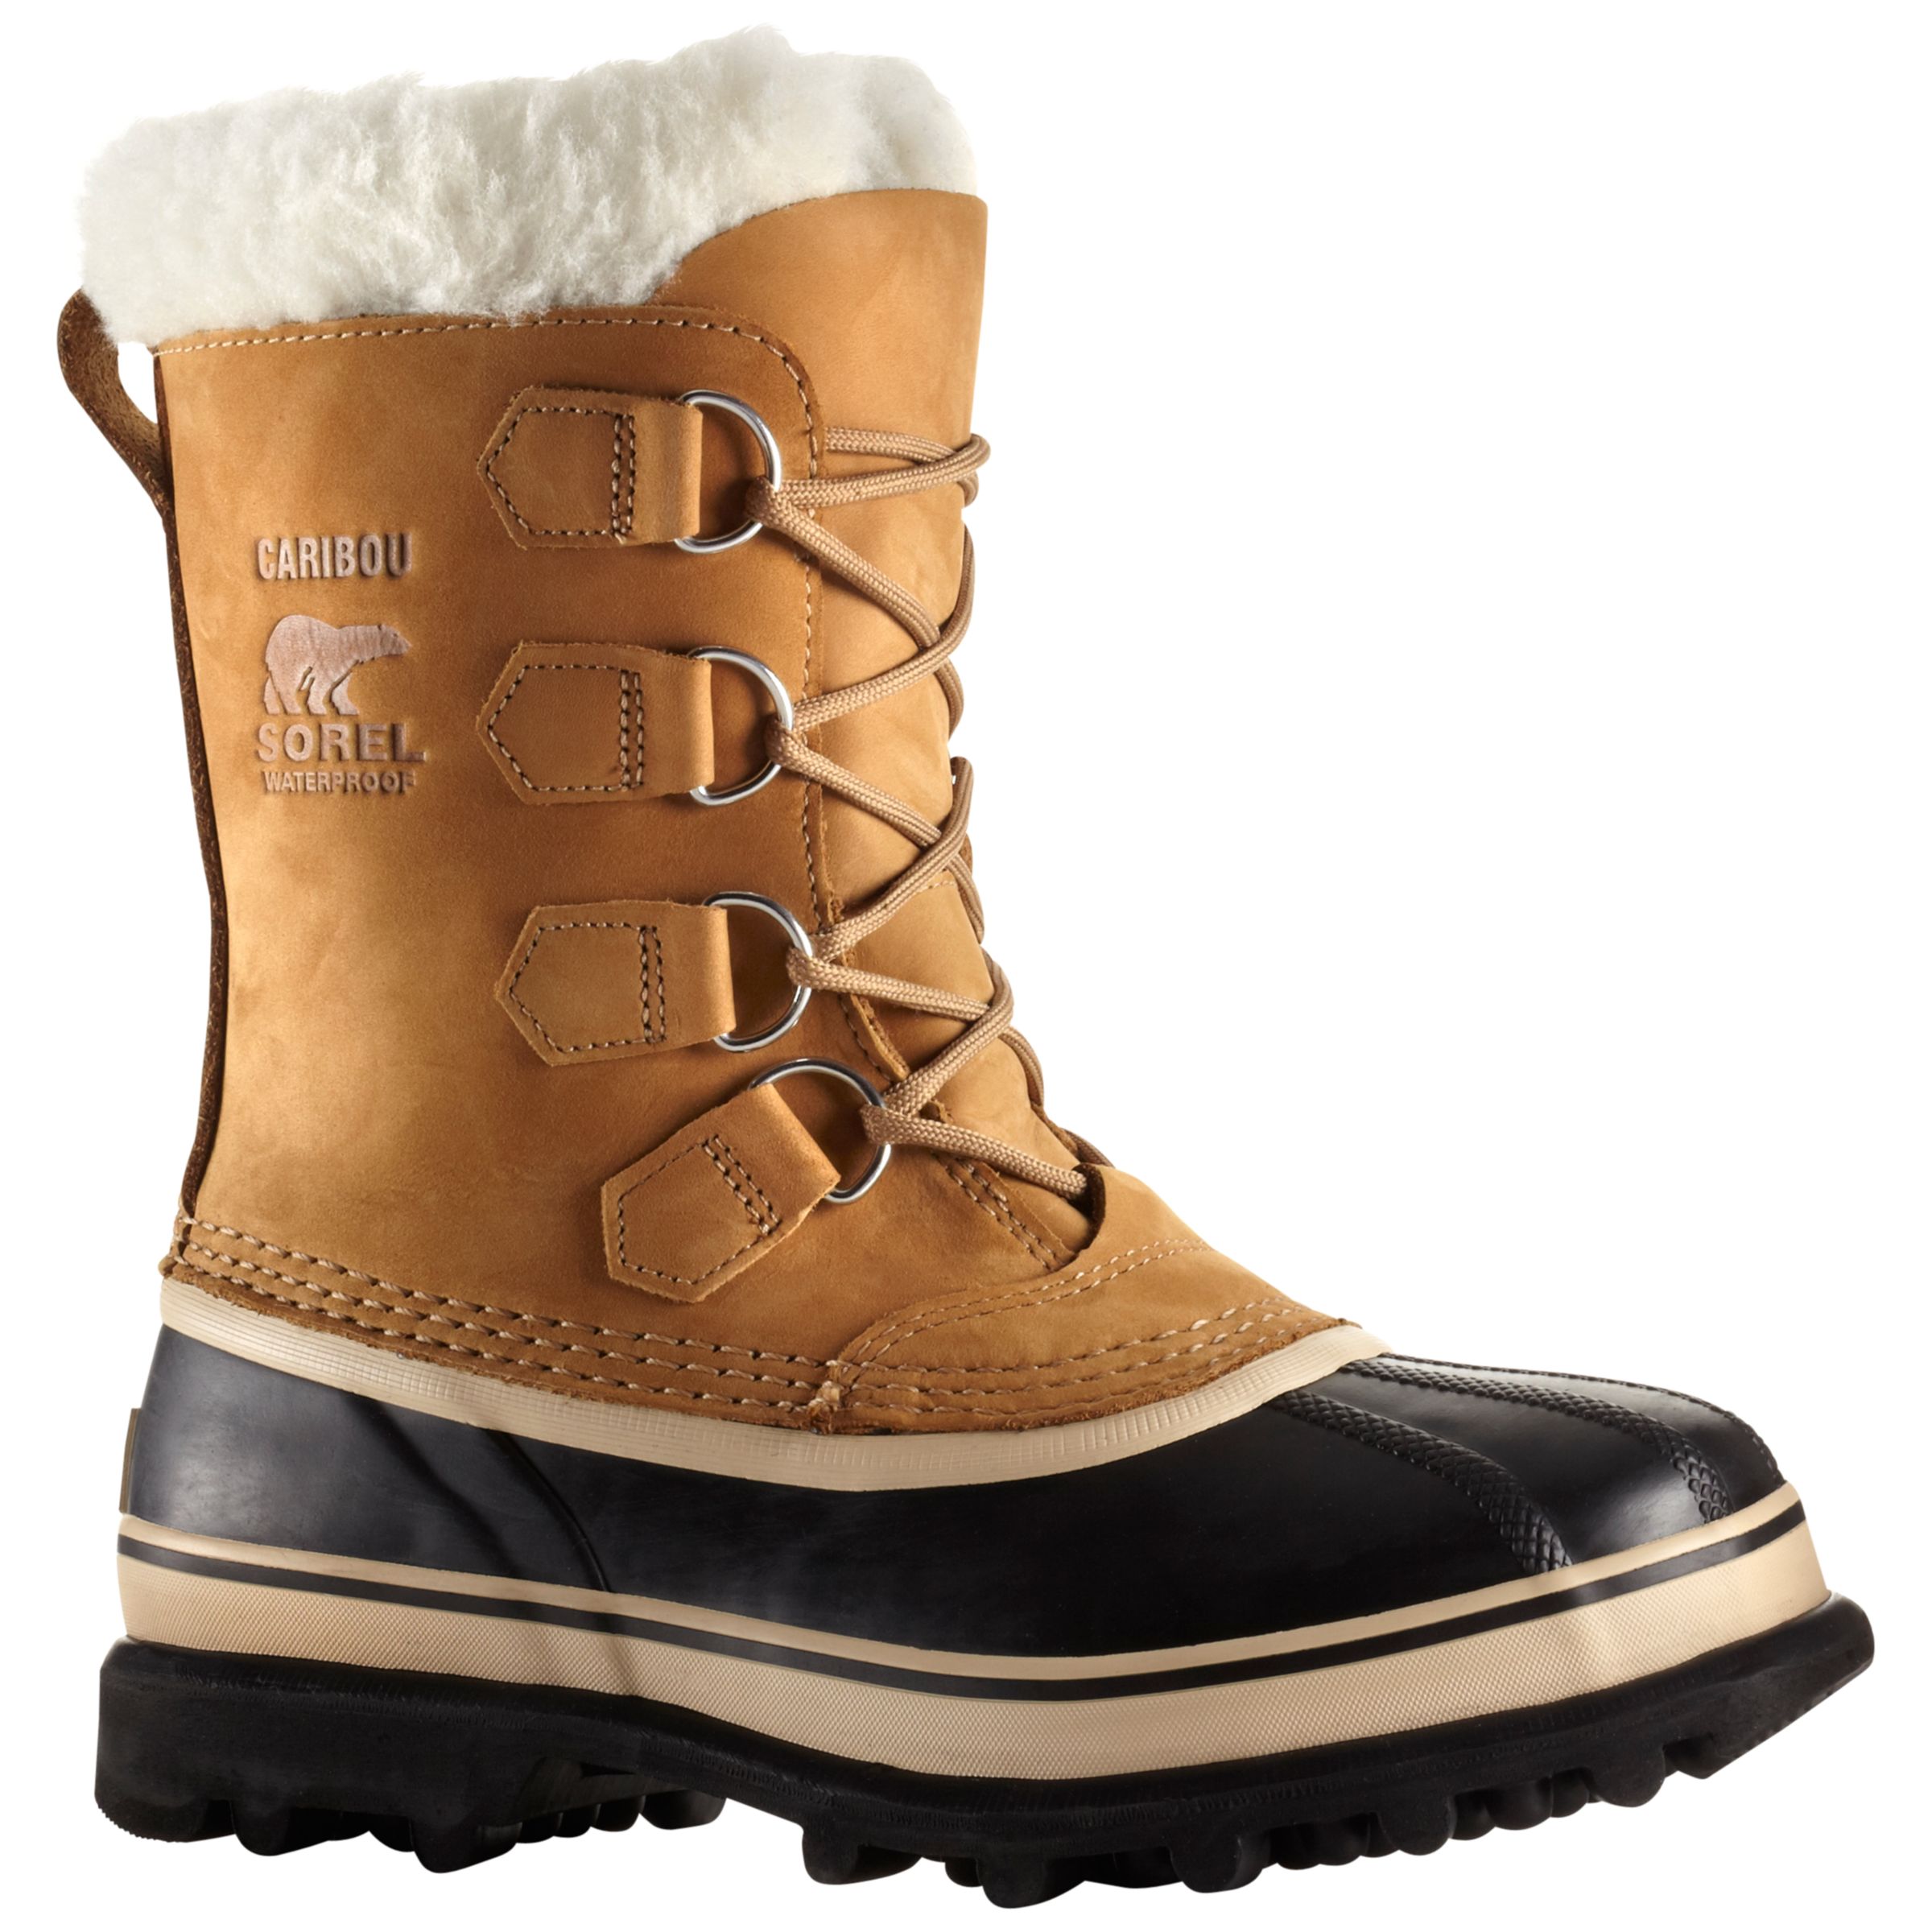 Sorel Caribou Women's Winter Snow Boots 